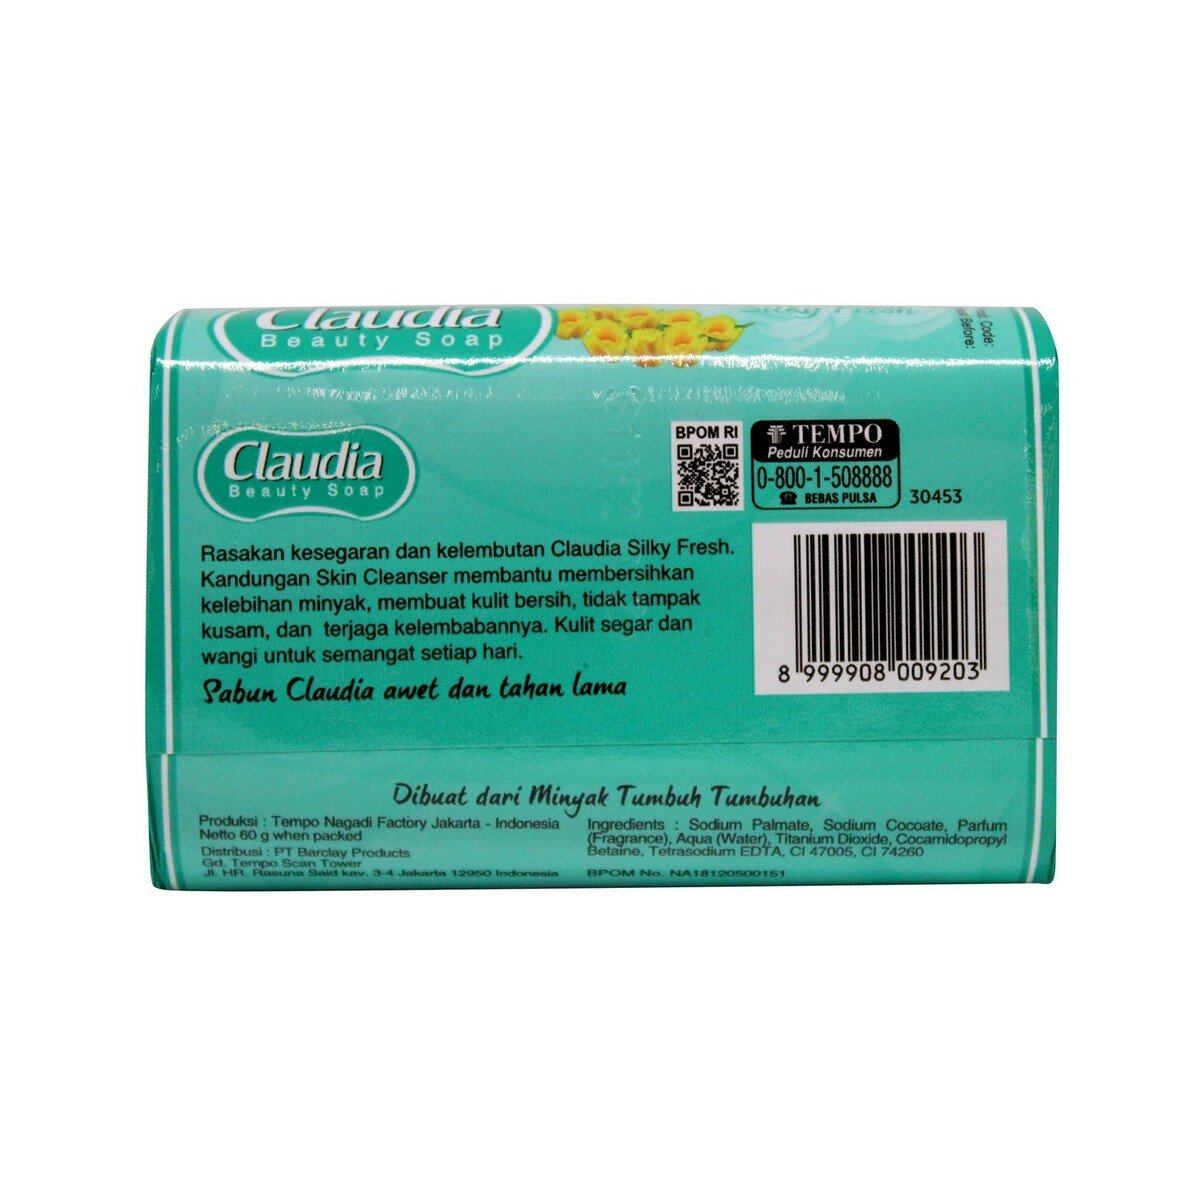 Claudia Bar Soap Silky Fresh 60g